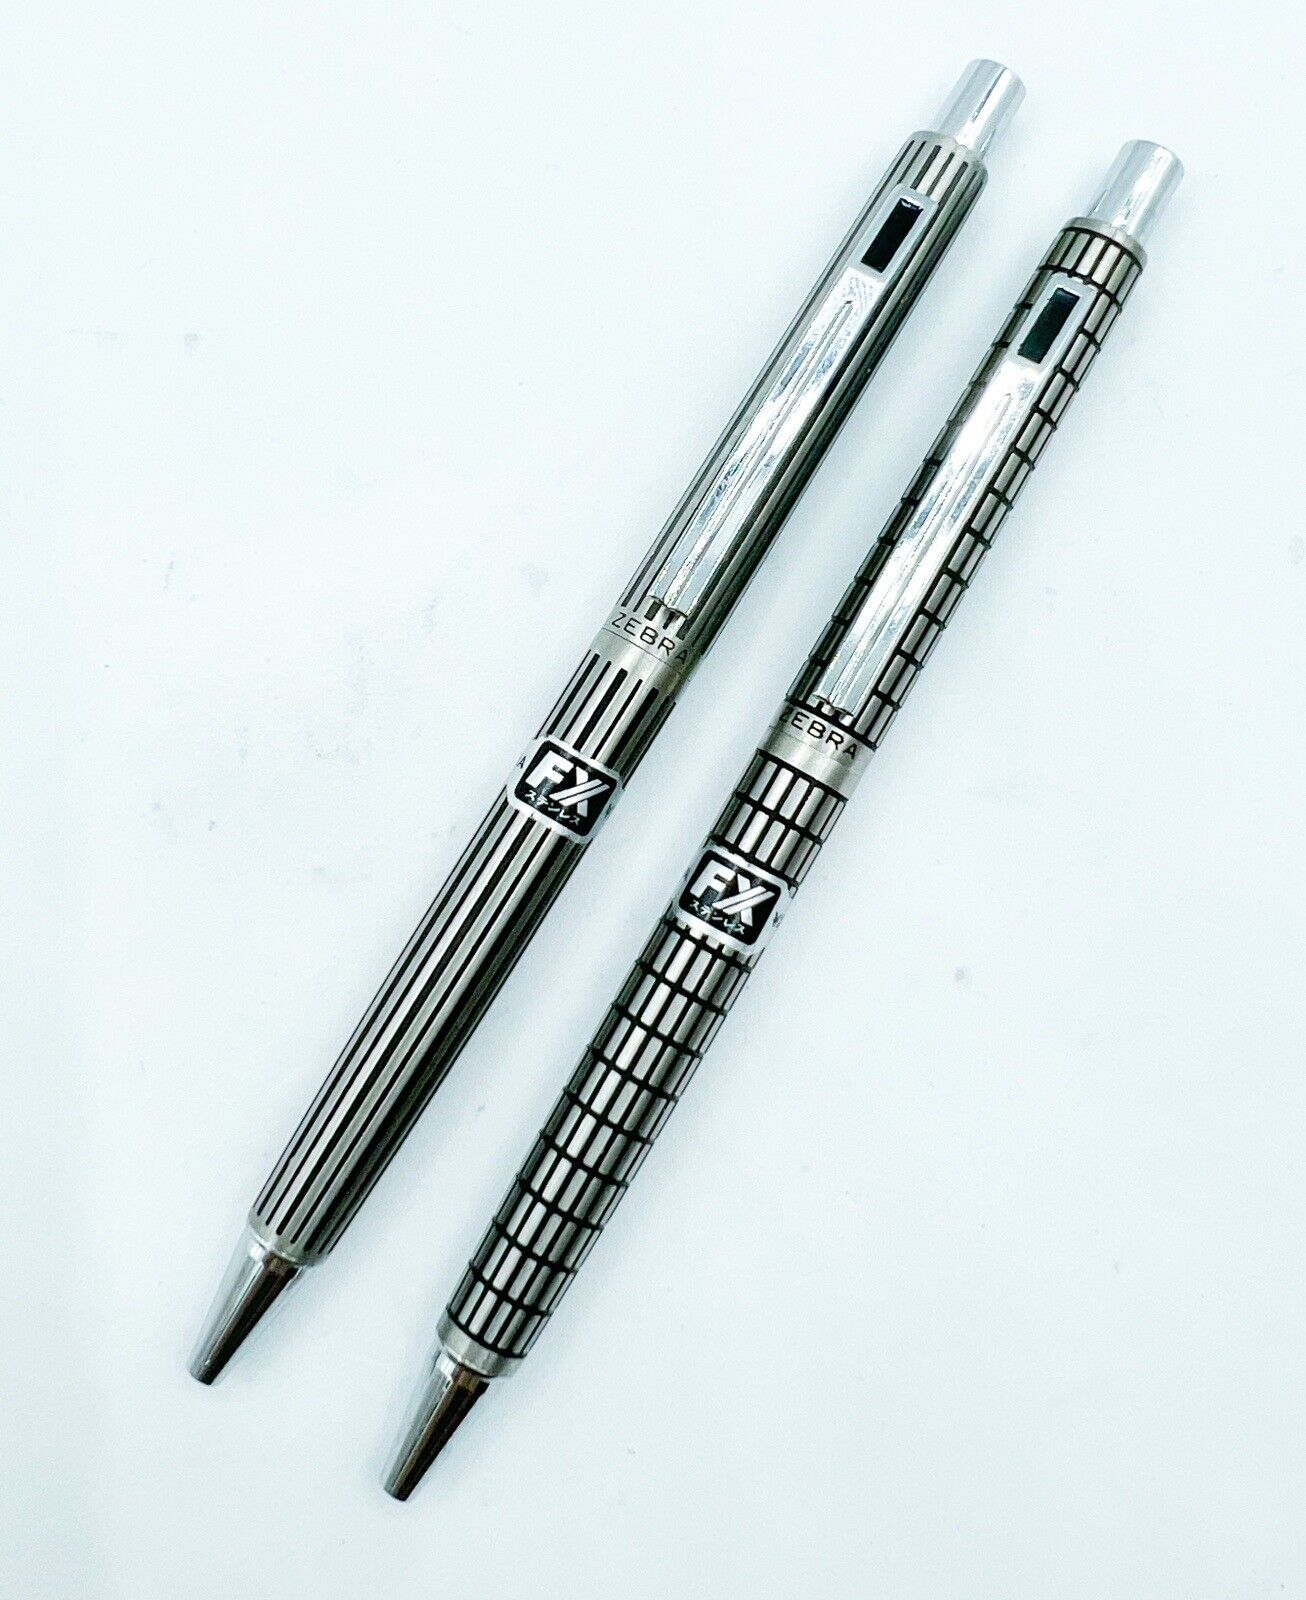 NOS Zebra FX 2pcs Ballpoint Pen Etched Version Full Metal Black 